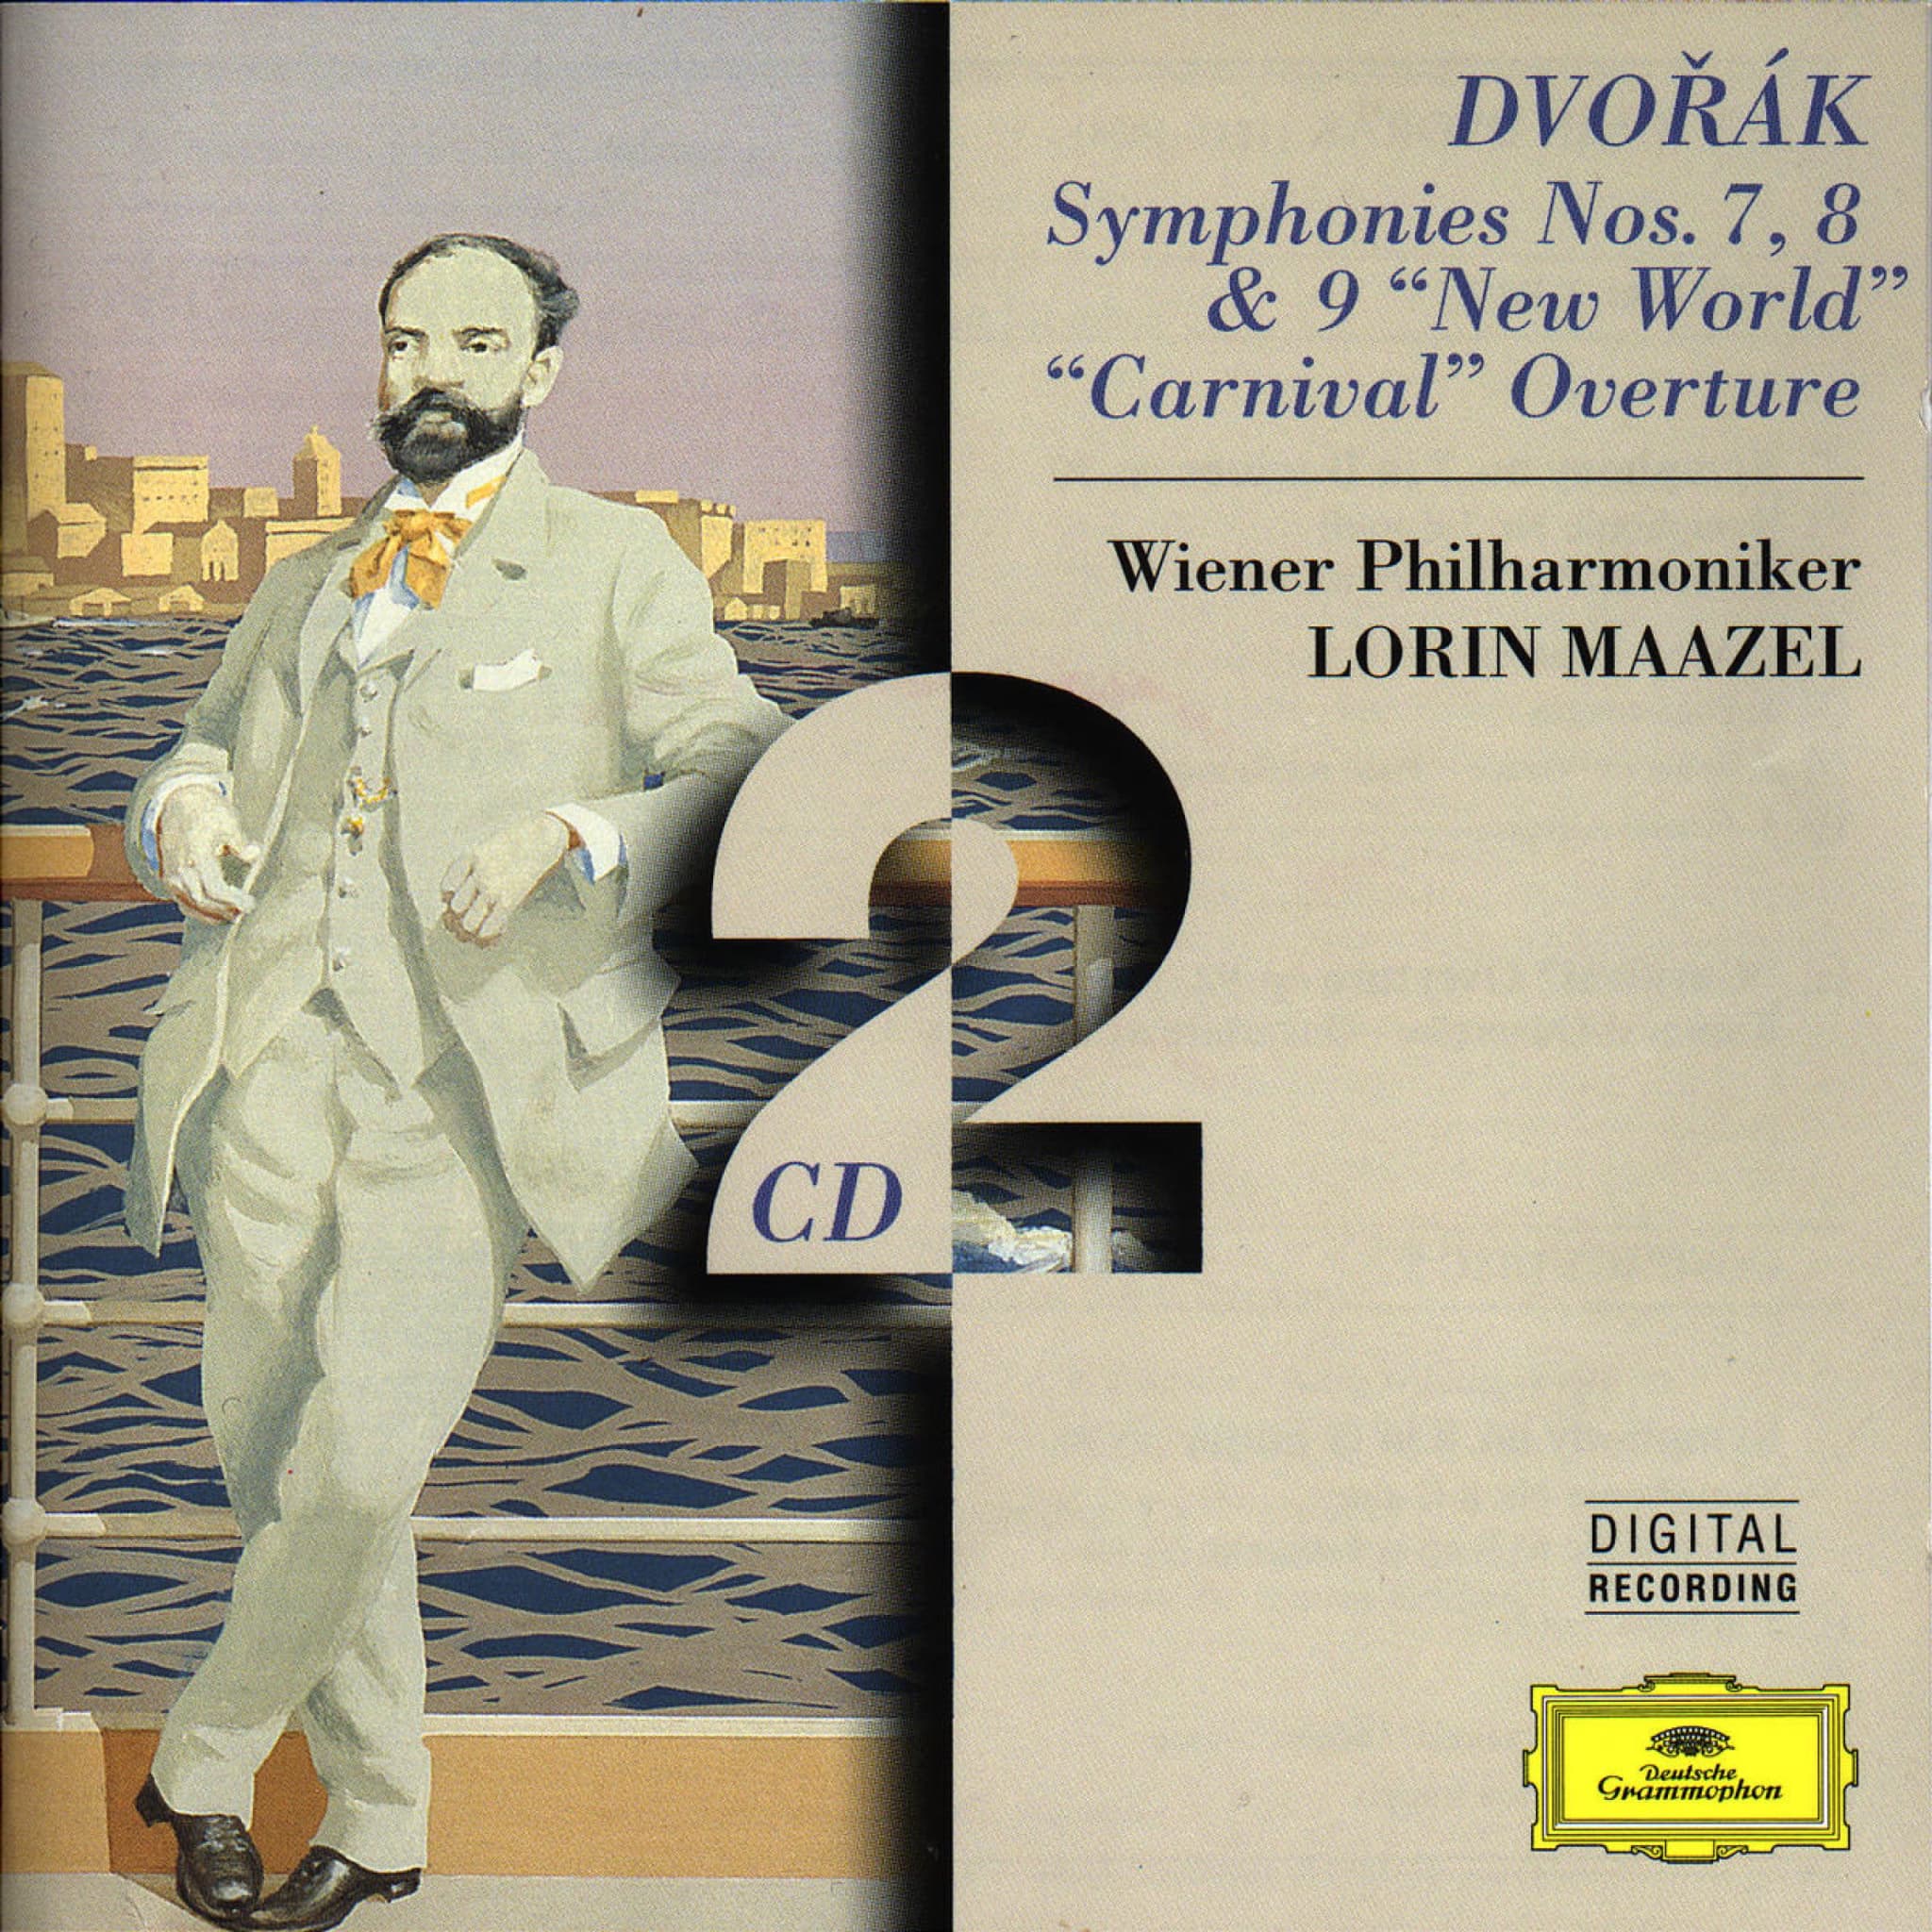 Dvorák: Symphonies Nos. 7, 8 & 9 "New World" · "Carnival" Overture